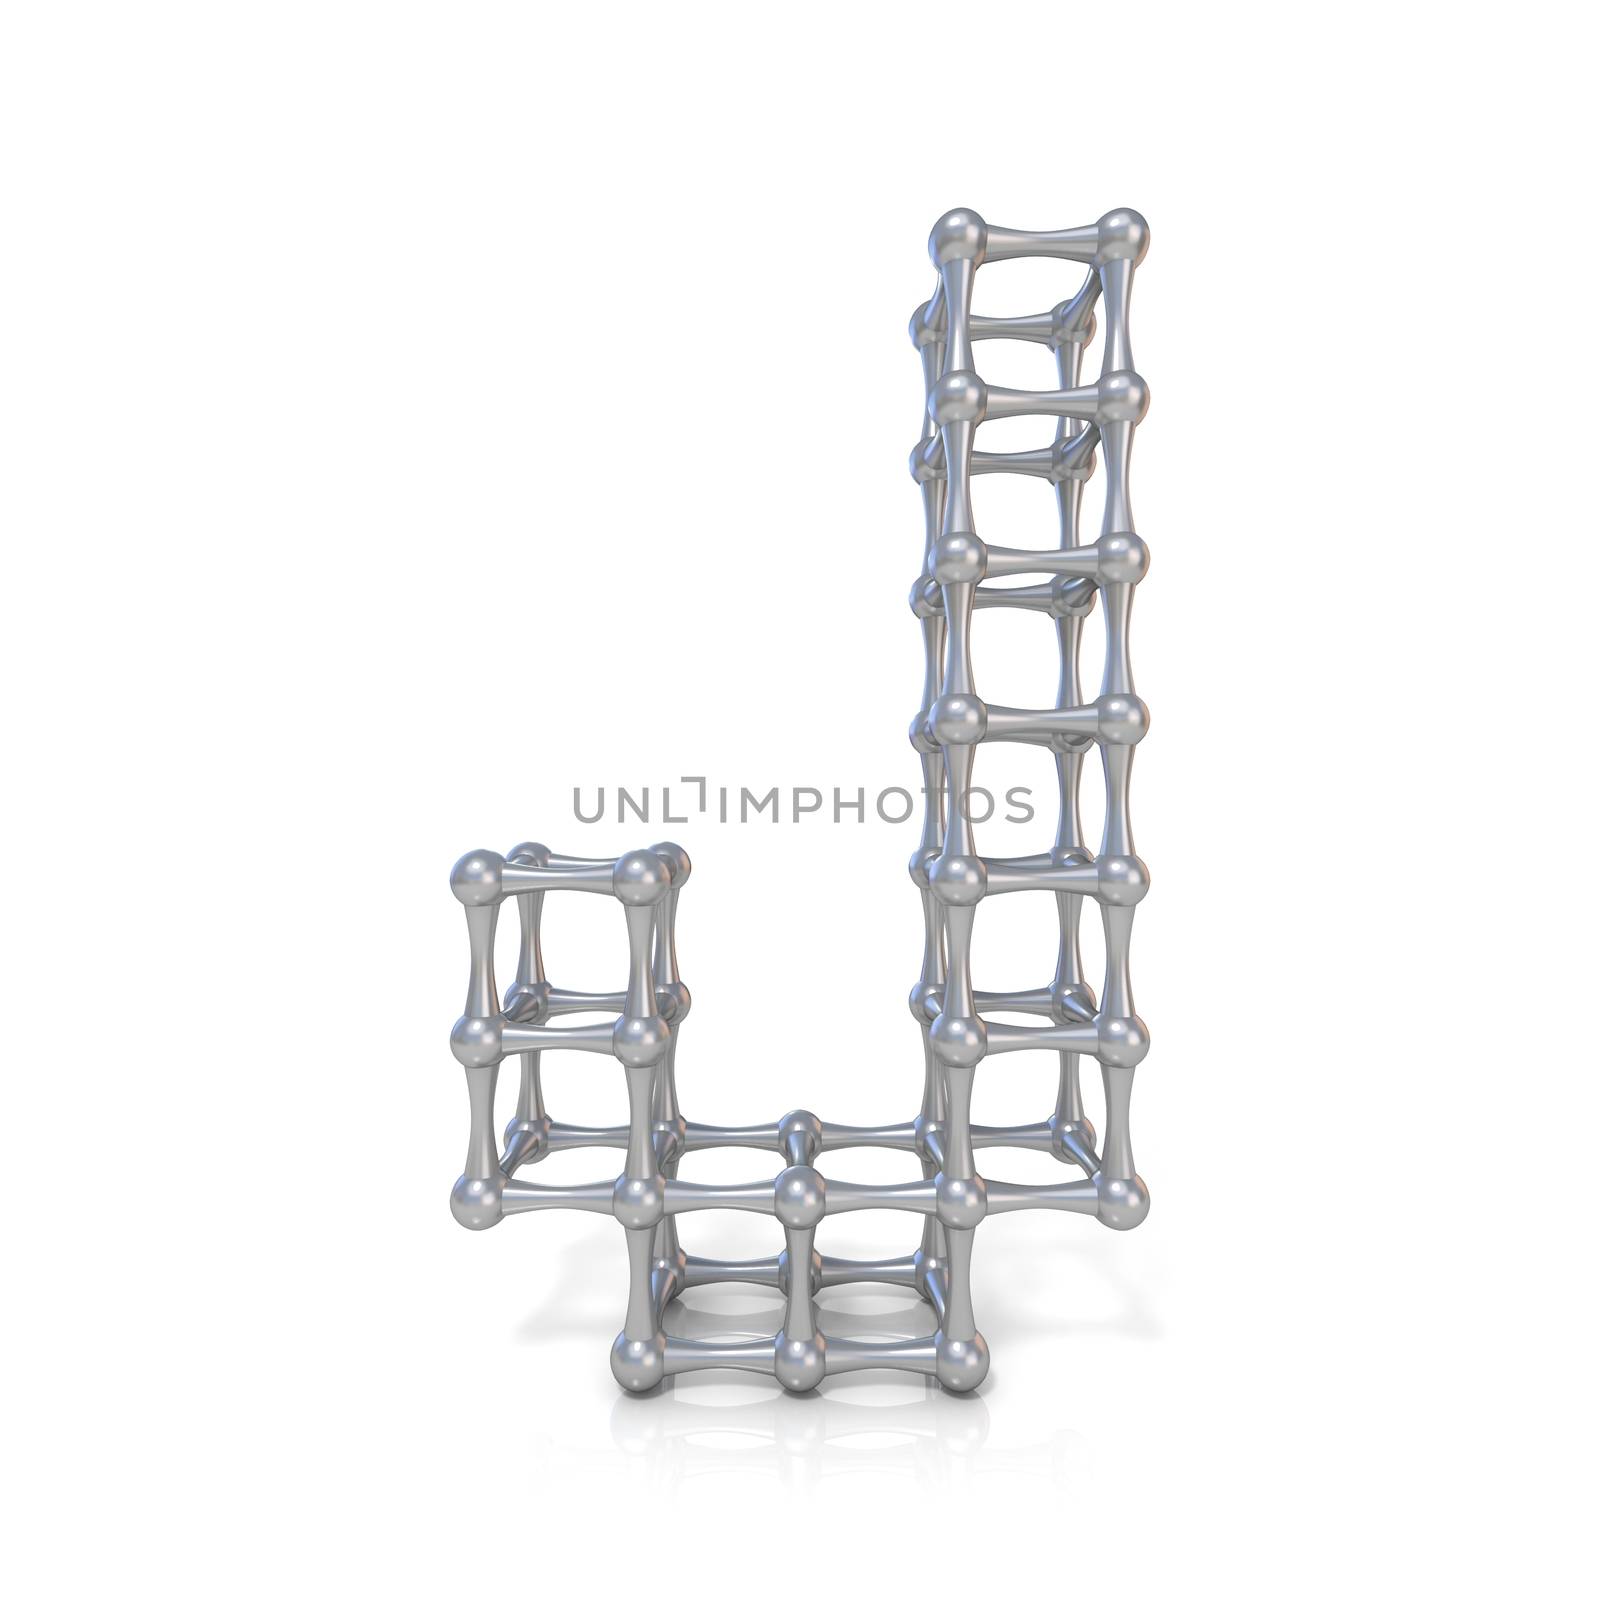 Metal lattice font letter J 3D render illustration isolated on white background